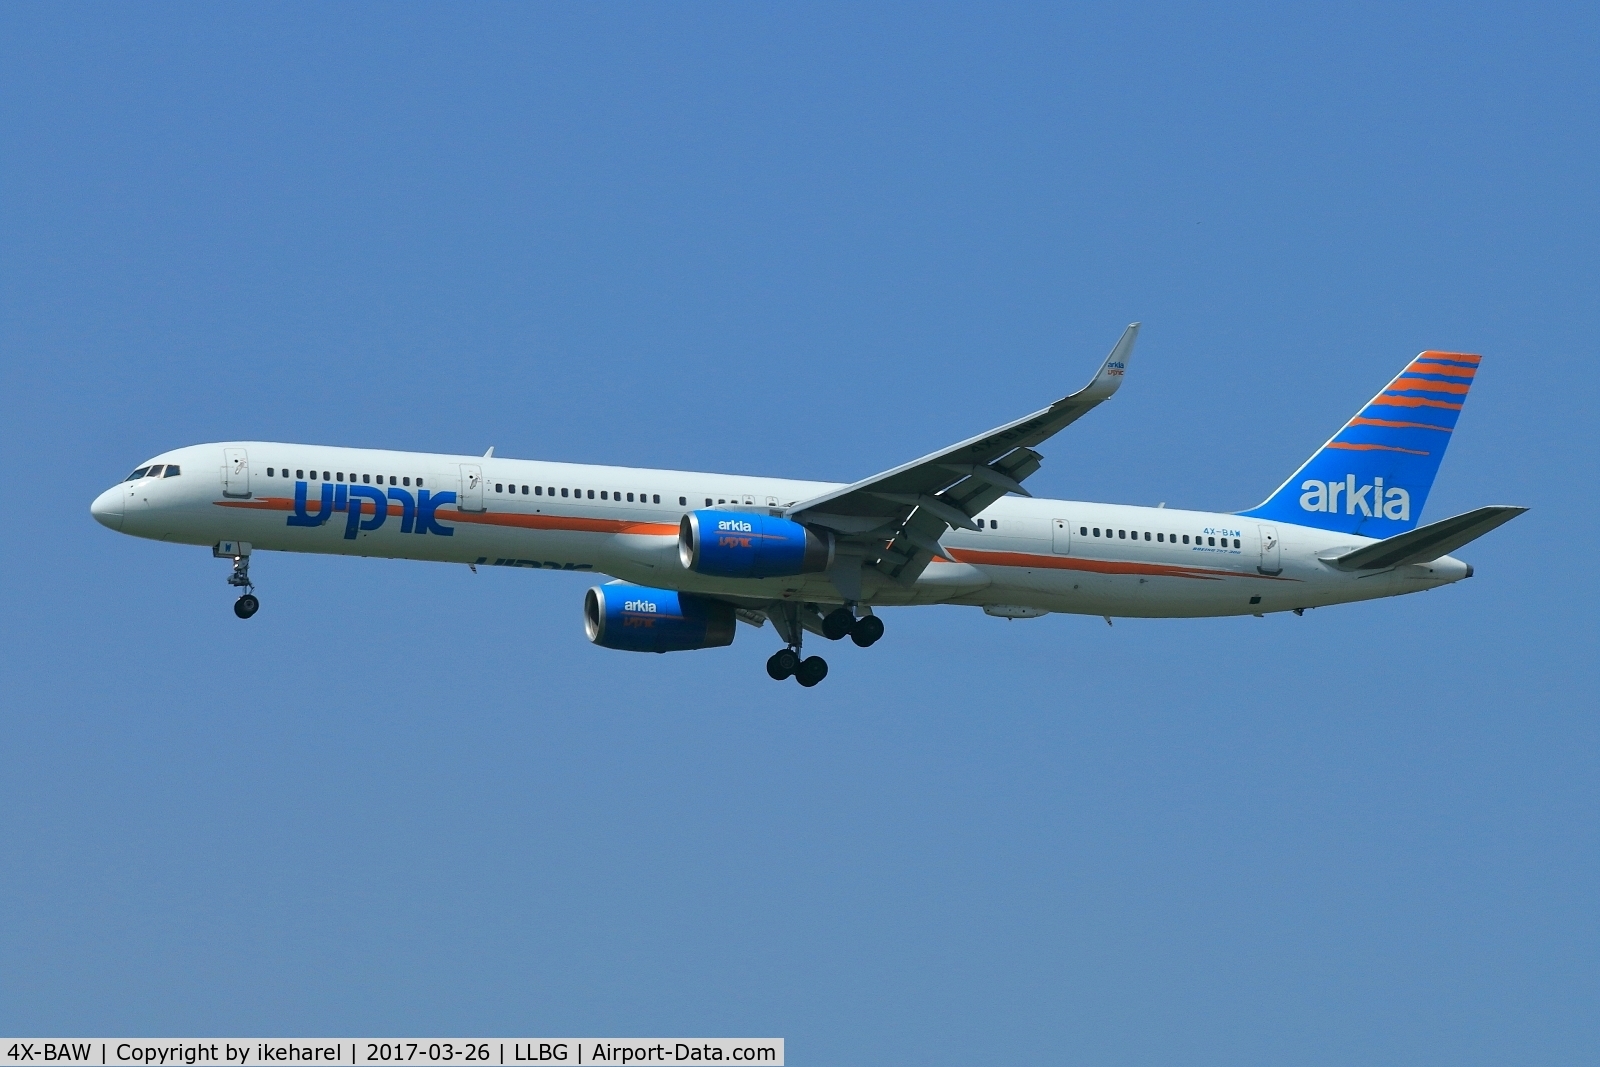 4X-BAW, 2000 Boeing 757-3E7 C/N 30179, Flight from Eilat, Israel, upon landing on runway 21.